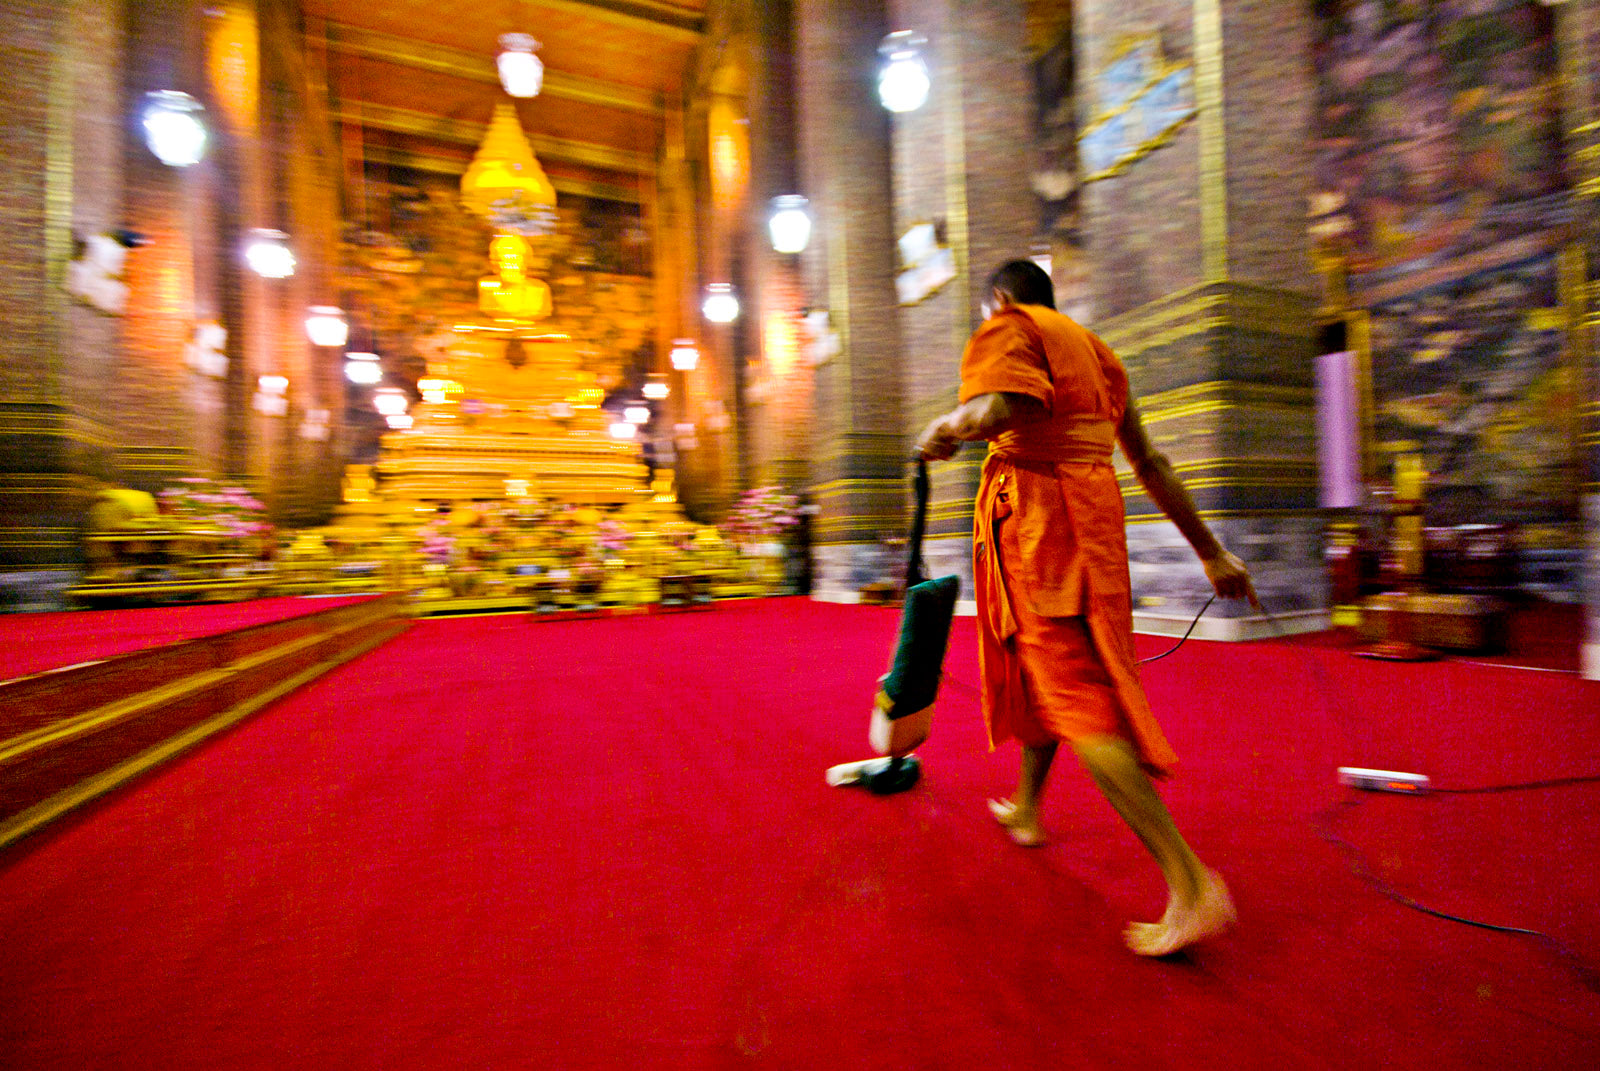 A Buddhist Monk vacuums the chapel's red carpet after evening prayer. Wat Pho, Temple of the Reclining Buddha, Wat Chetuphon, Phra Nakhon District, Rattanakosin District, Bangkok, Thailand.